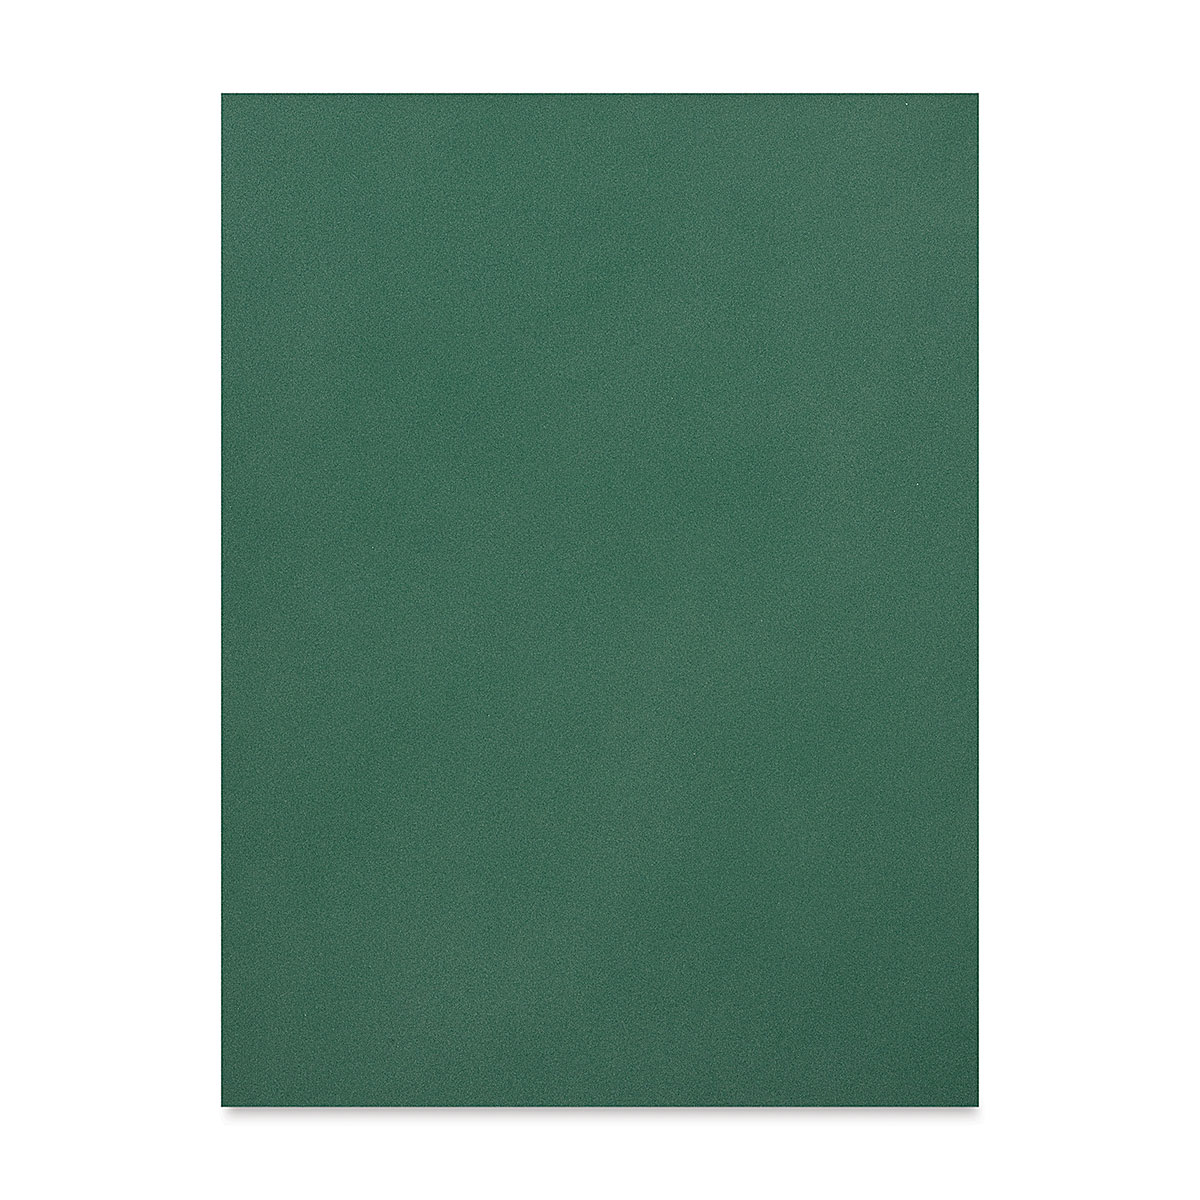 Clairefontaine Pastelmat Sheet - 27-1/2 x 39-1/2, Dark Gray, 1 Sheet 